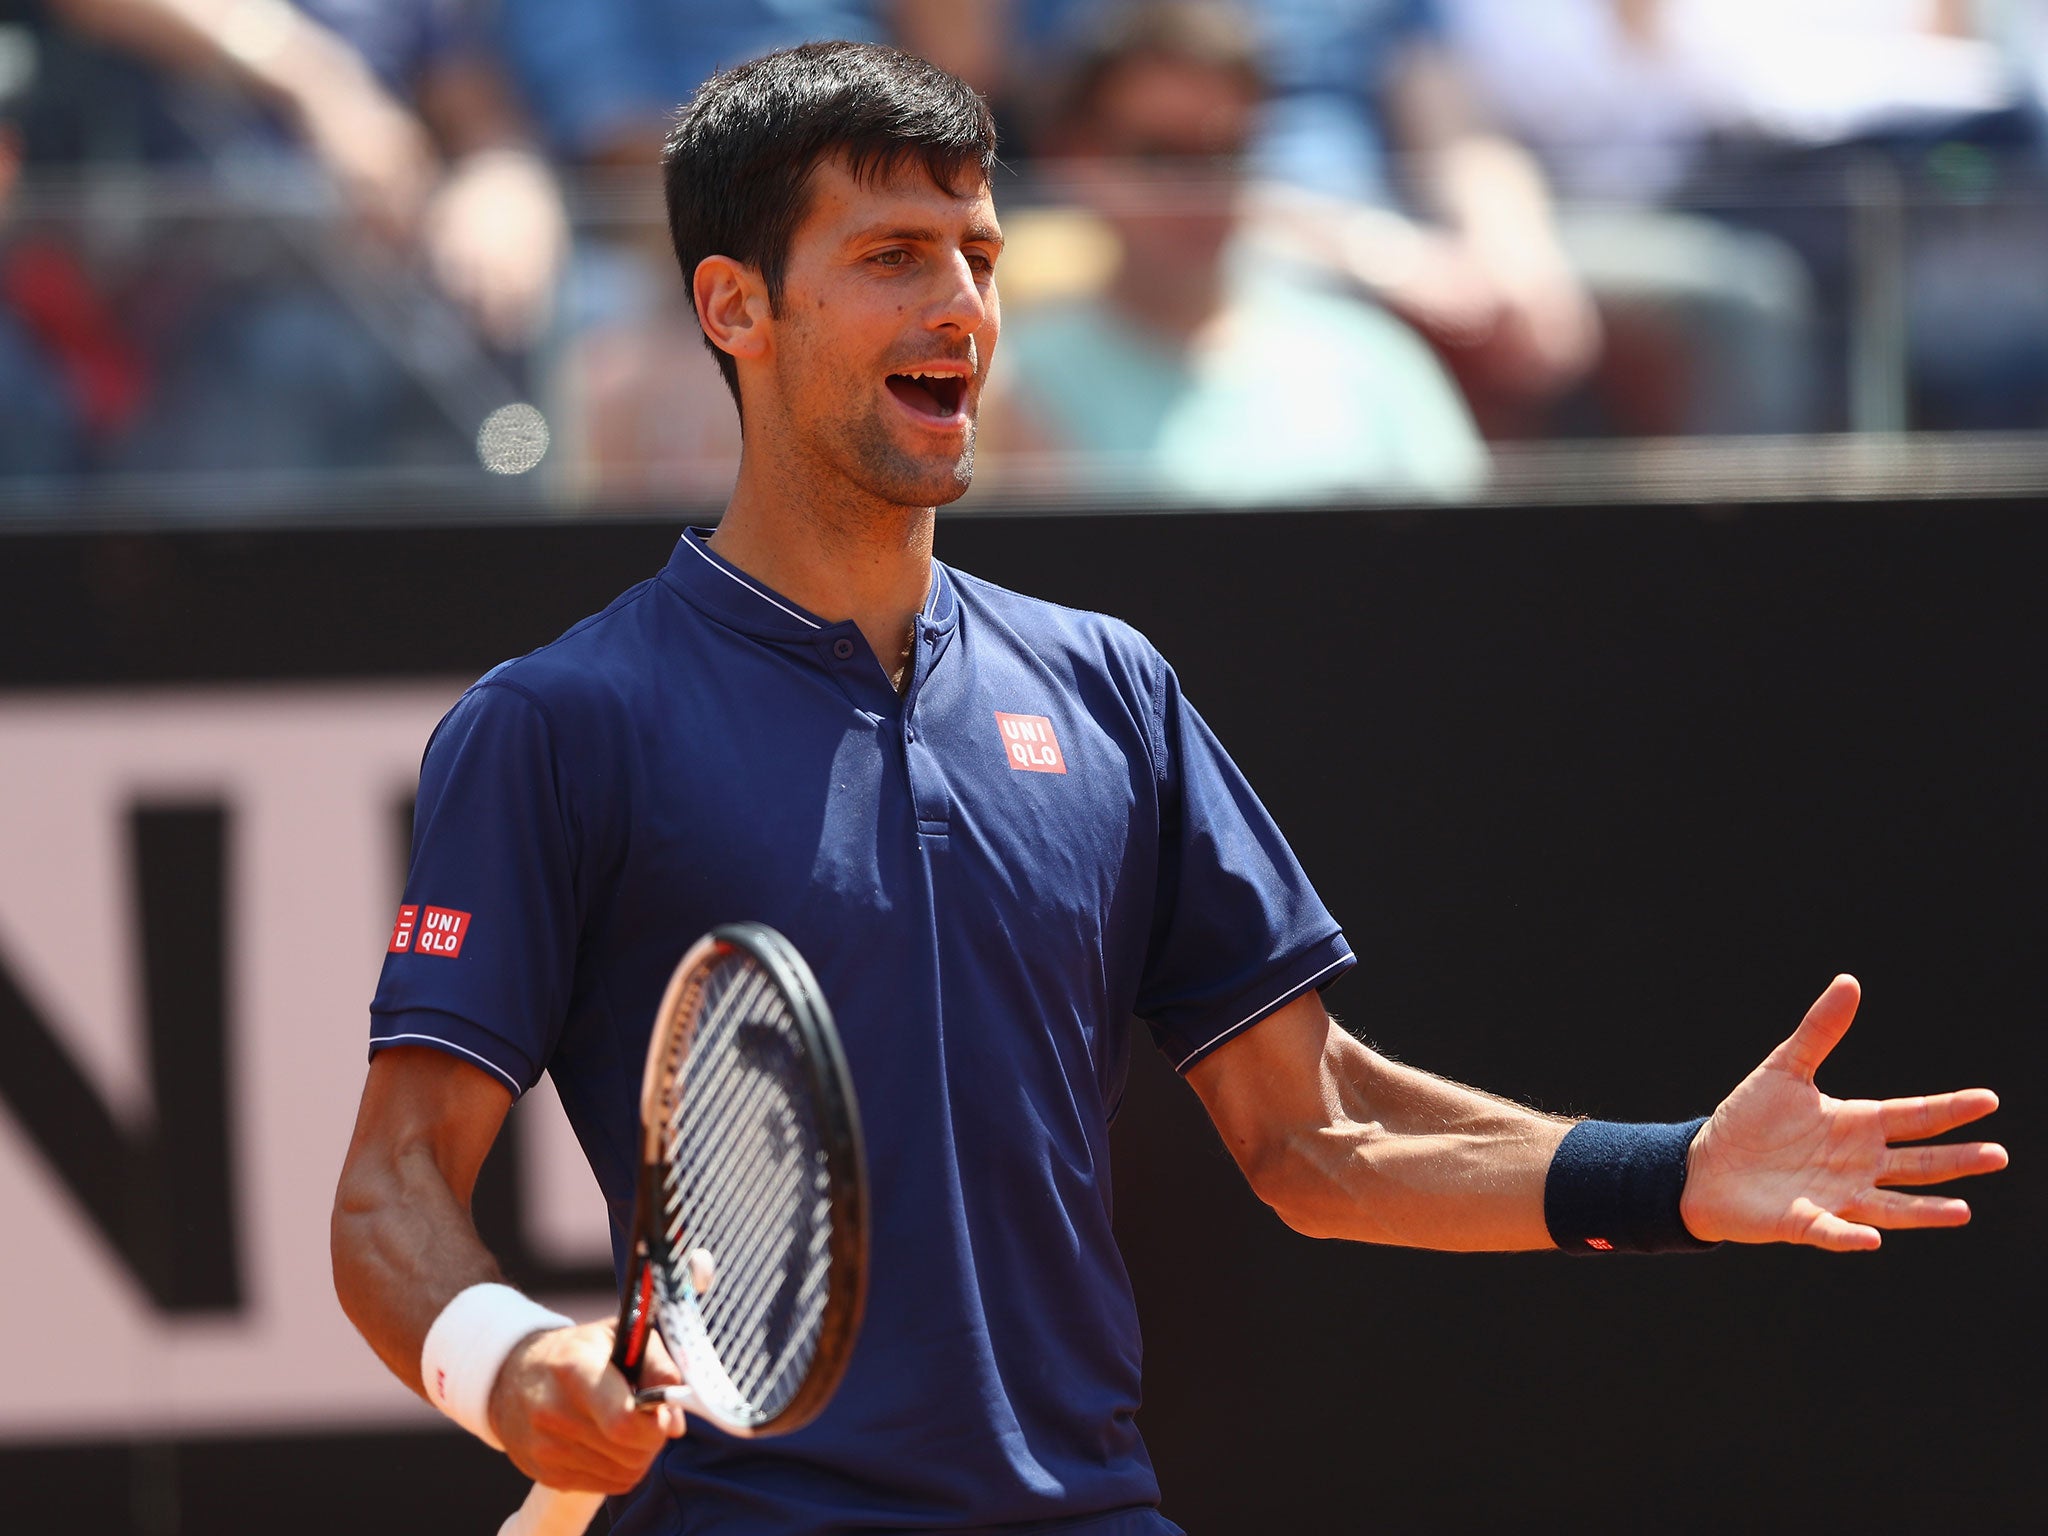 Novak Djokovic eases past Juan Martin del Potro after rain delay to reach Rome semis - The Independent